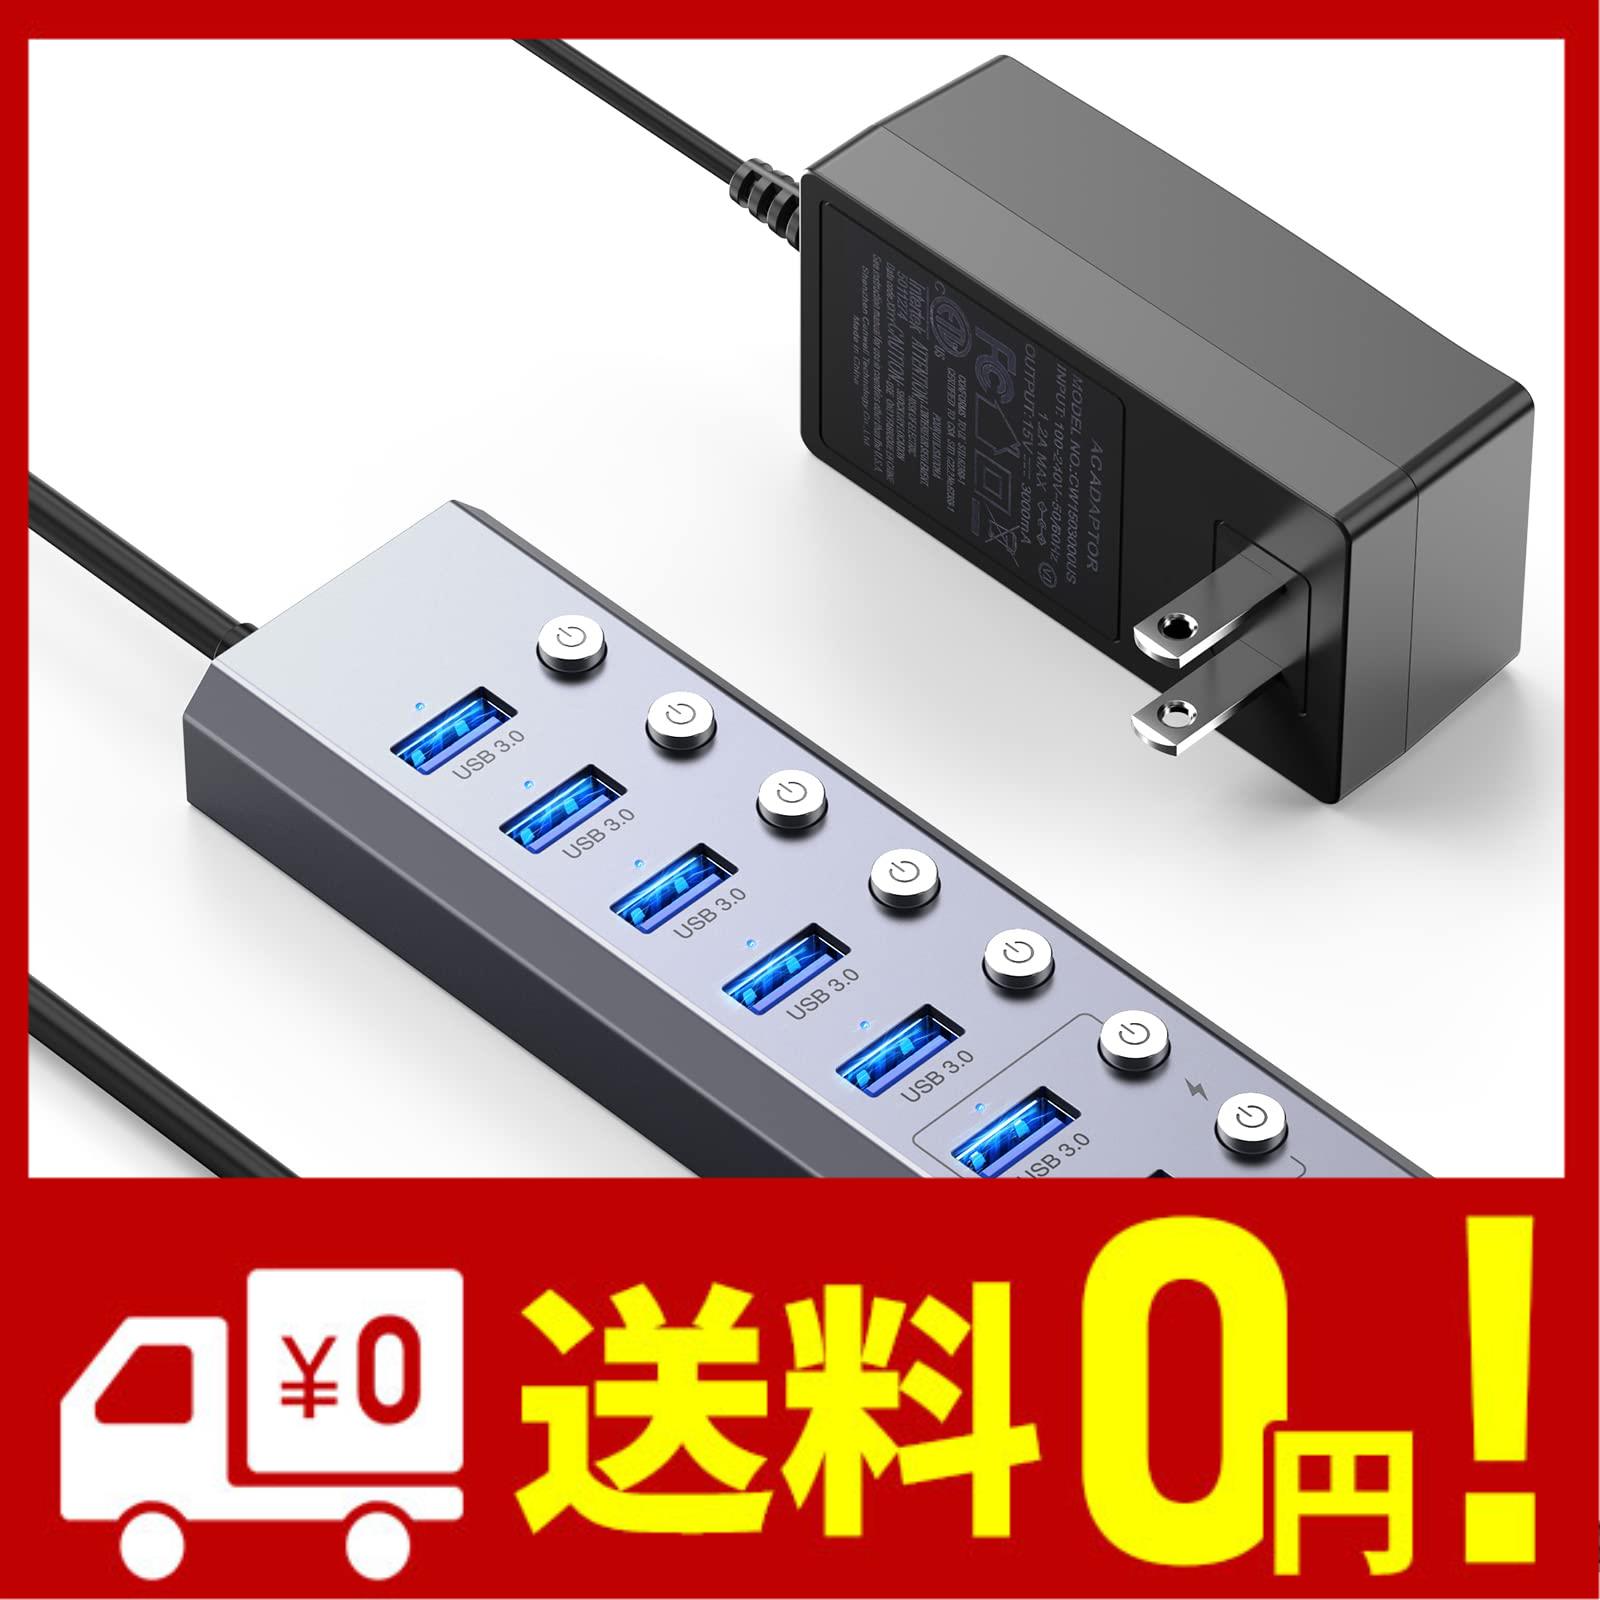 Elecife USB ハブ 8IN1 USB 3.0 Hub 7ポート 1USB C PD急速充電ポート 2023 改良 5Gbps高速 USB拡張 USBポート 増設 セルフパワー バス